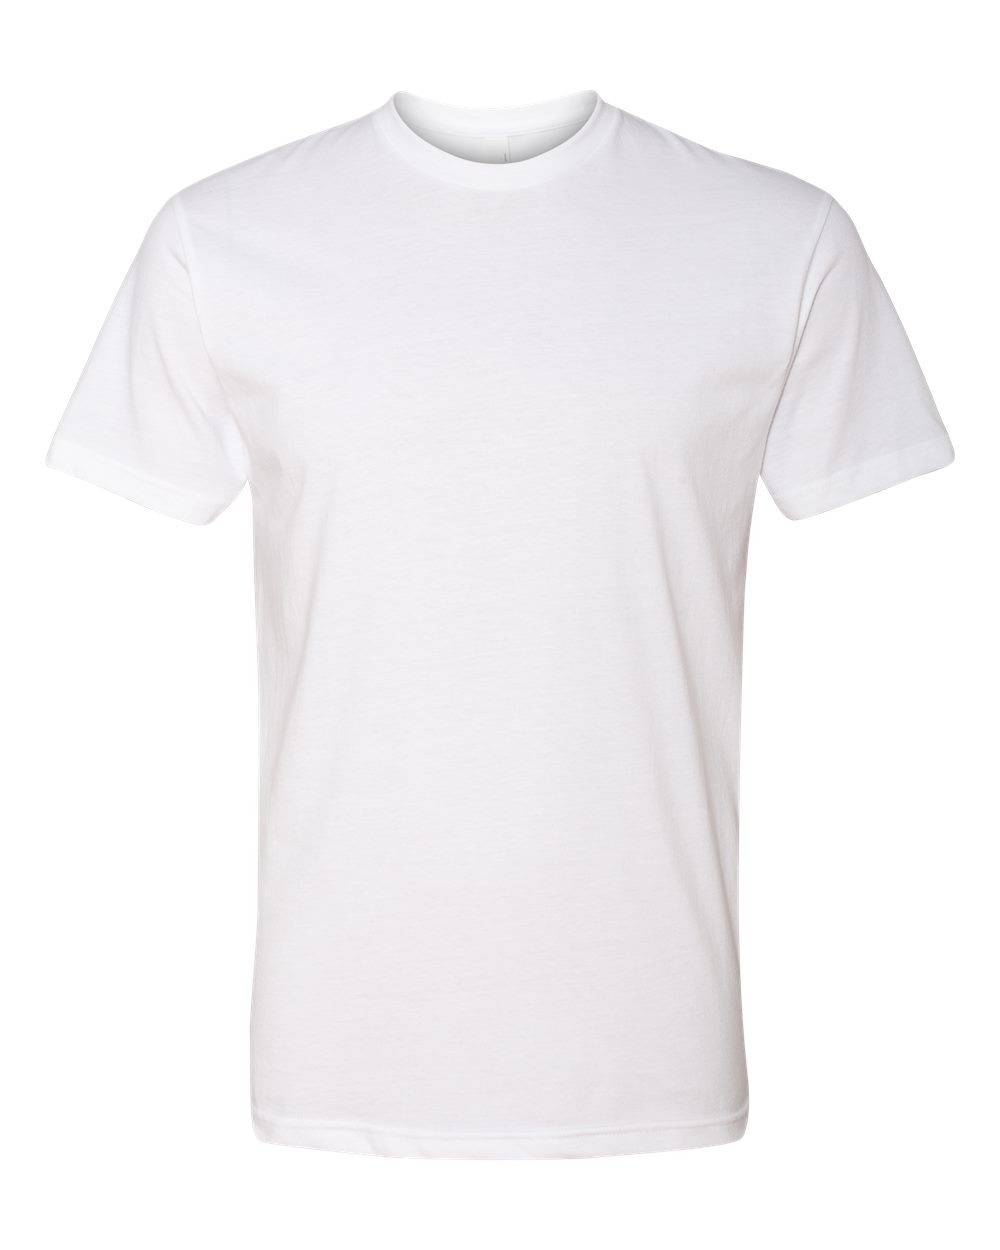 Next Level N6210, Unisex CVC T-Shirt